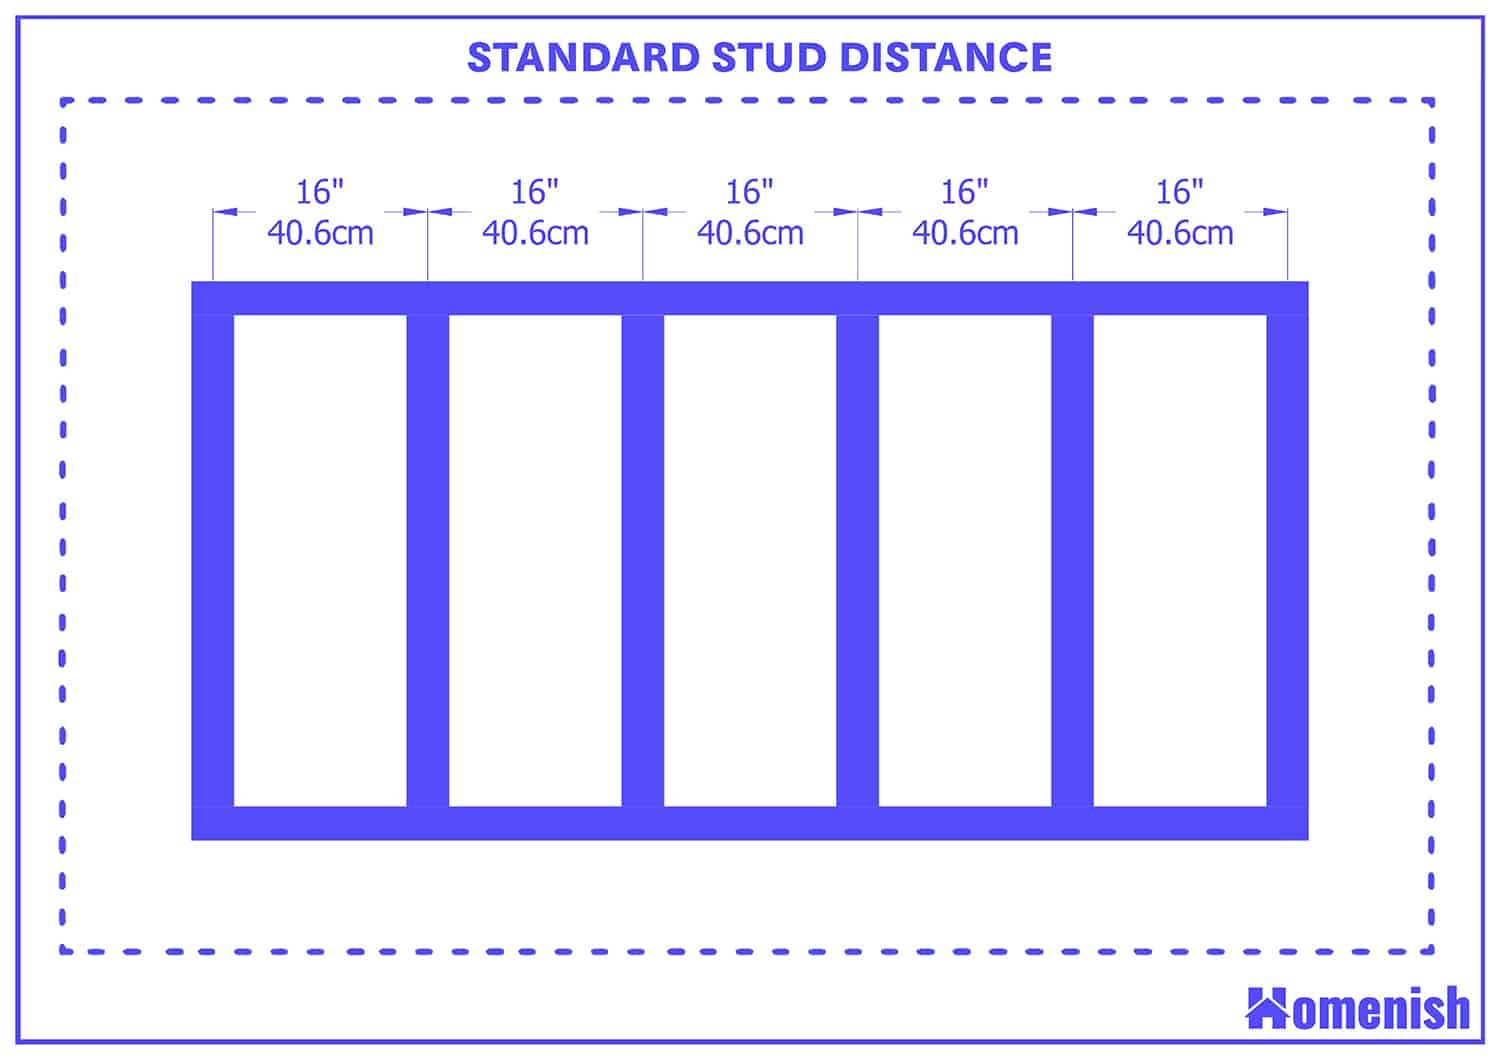 Standard Stud Distance